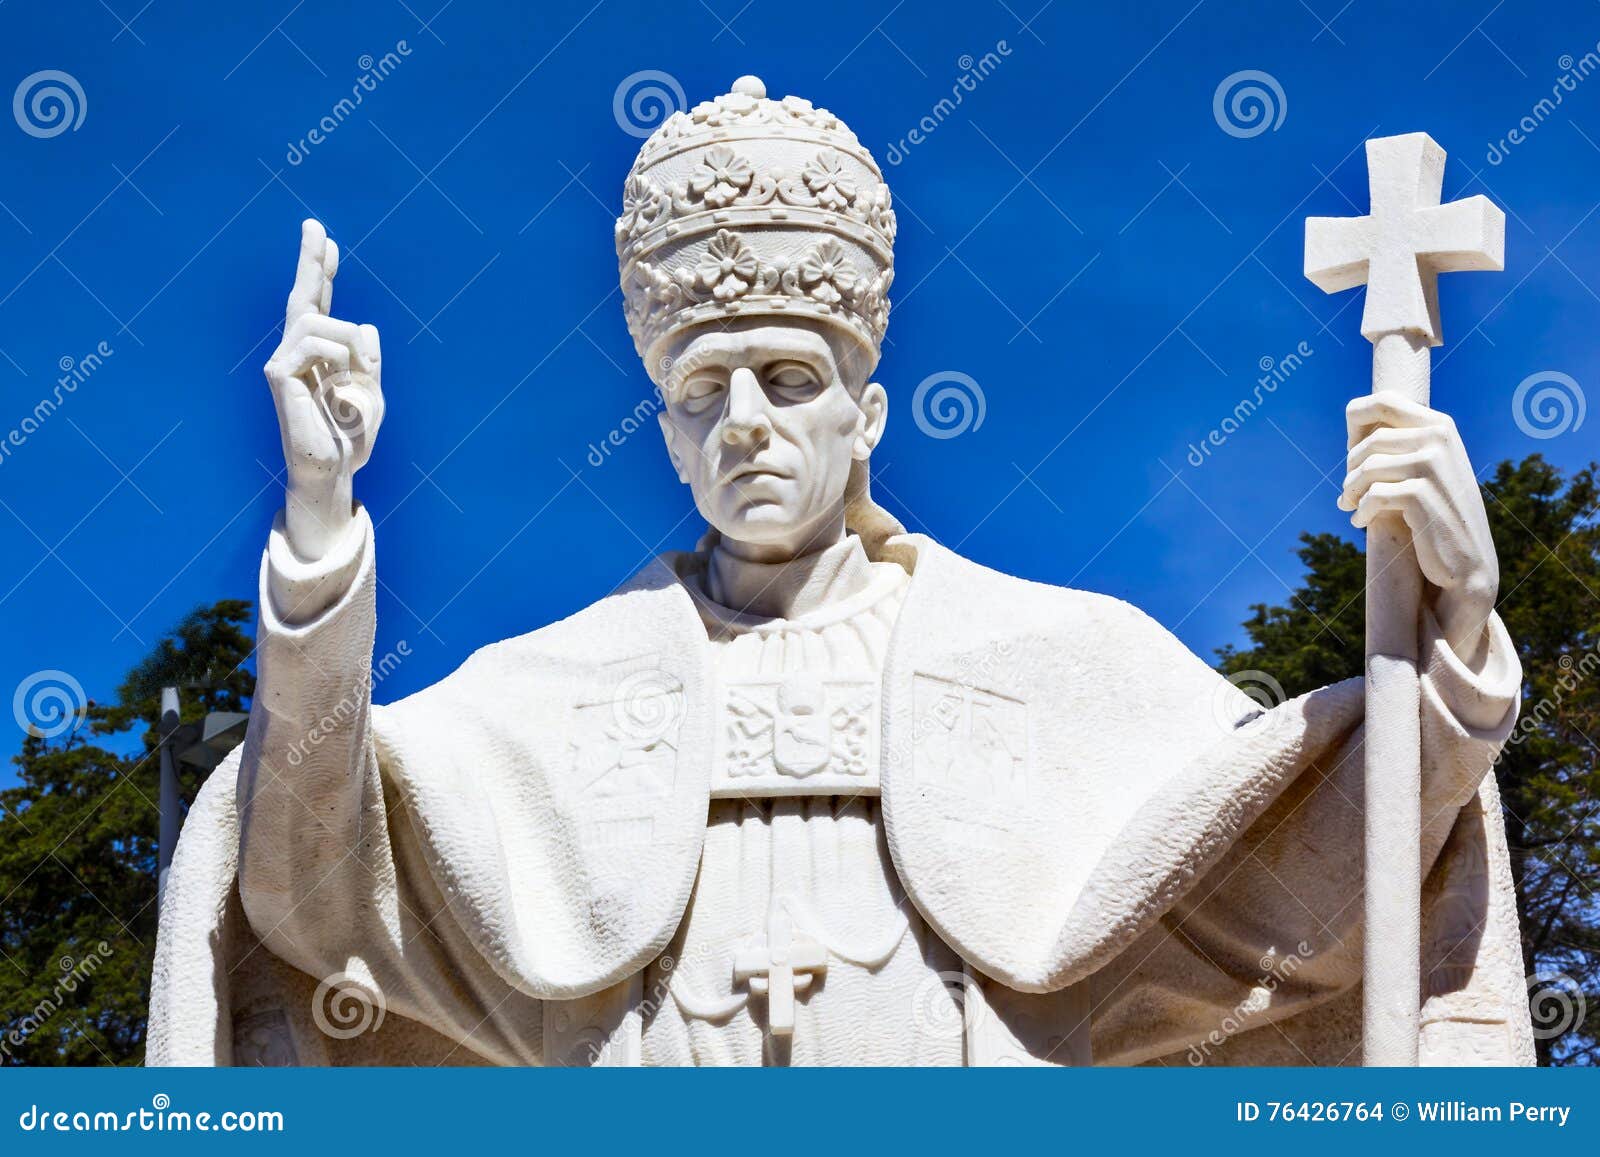 pope pius xii statue basilica of lady of rosary fatima portugal